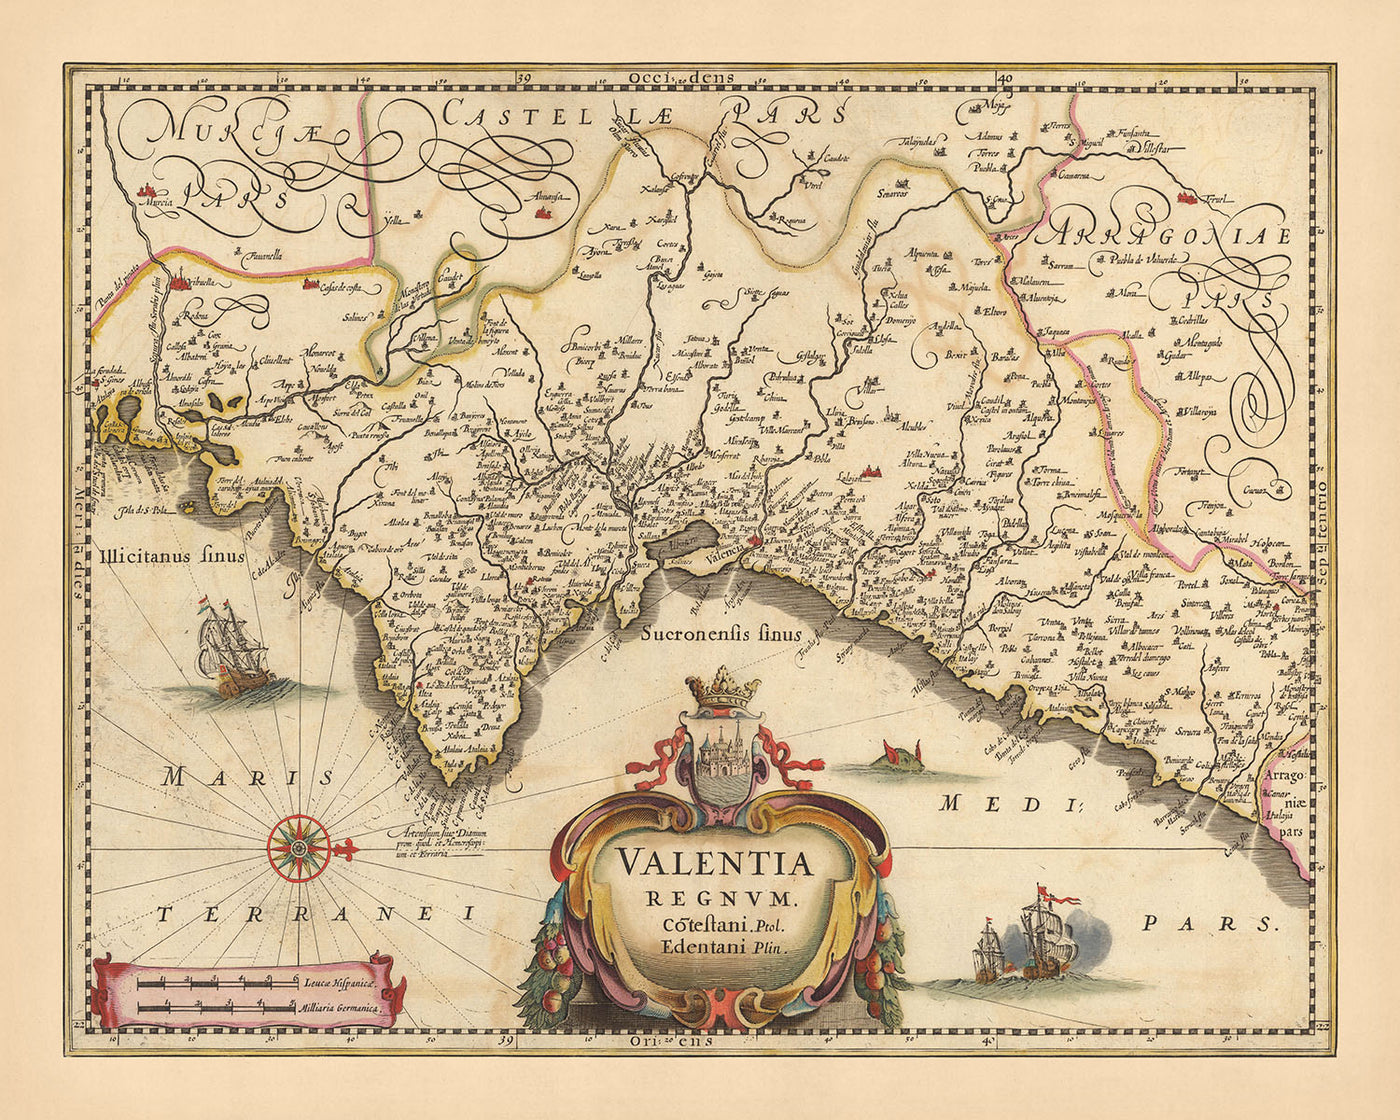 Old Map of the Kingdom of Valencia, Spain by Visscher, 1690: Murcia, Valencia, Alicante, Dénia, Castellón de la Plana